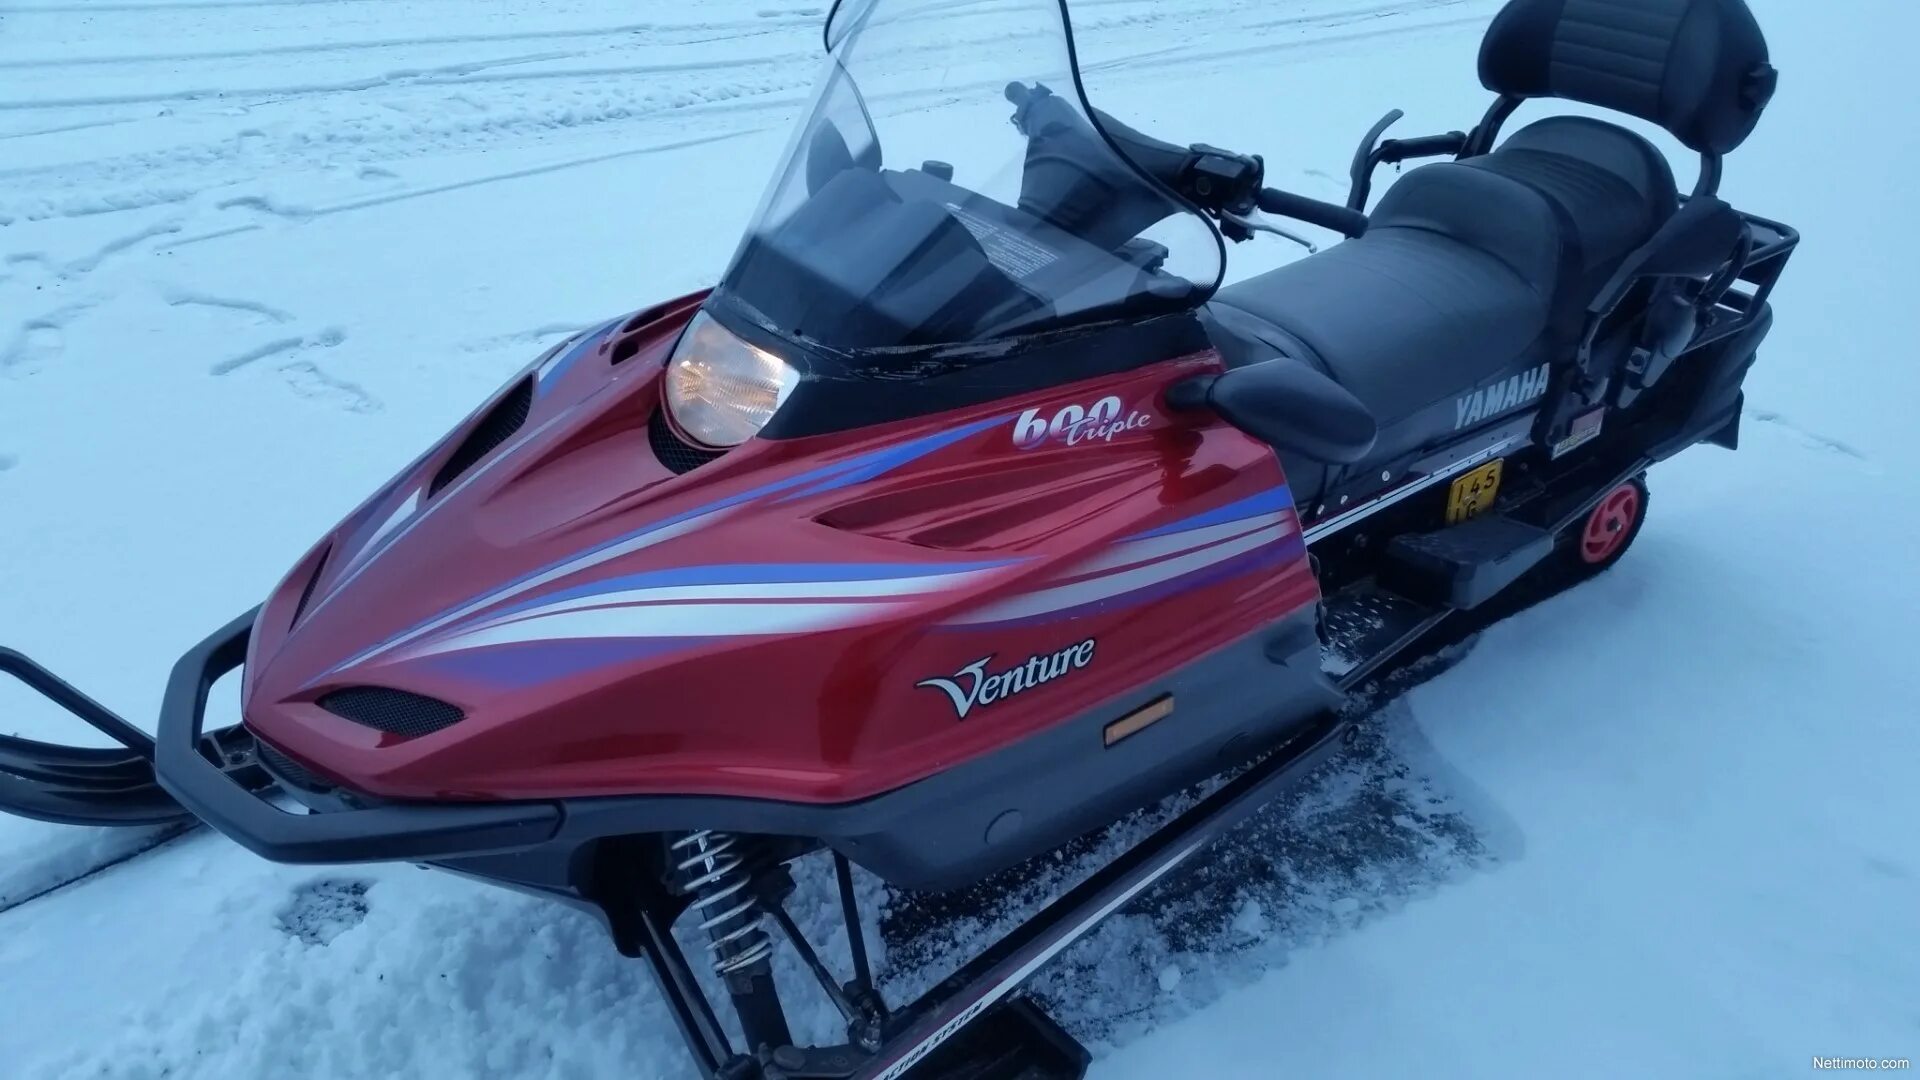 Купить снегоход в спб бу. Yamaha Venture 600. Ямаха Вентура 500. Снегоход Yamaha Venture 600. Ямаха Вентура 700 2000.